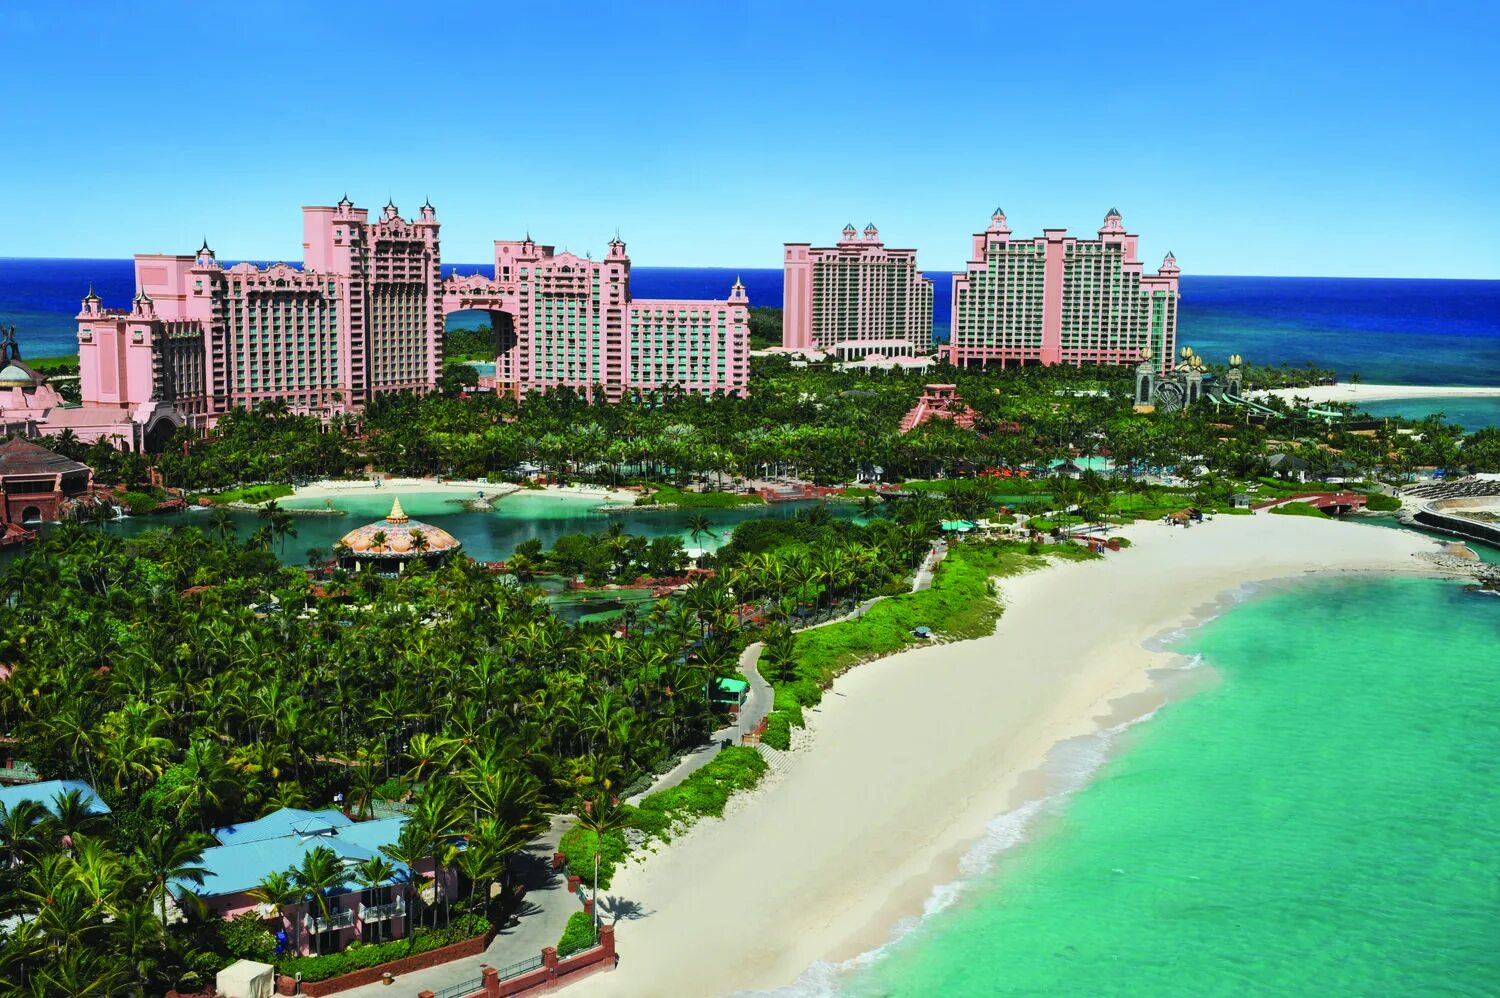 Bahamas islands. Атлантис Нассау Багамские острова. Атлантис Парадайз Багамы. Багамские острова отель Атлантис. Atlantis Paradise Island в Нассау (Багамы).